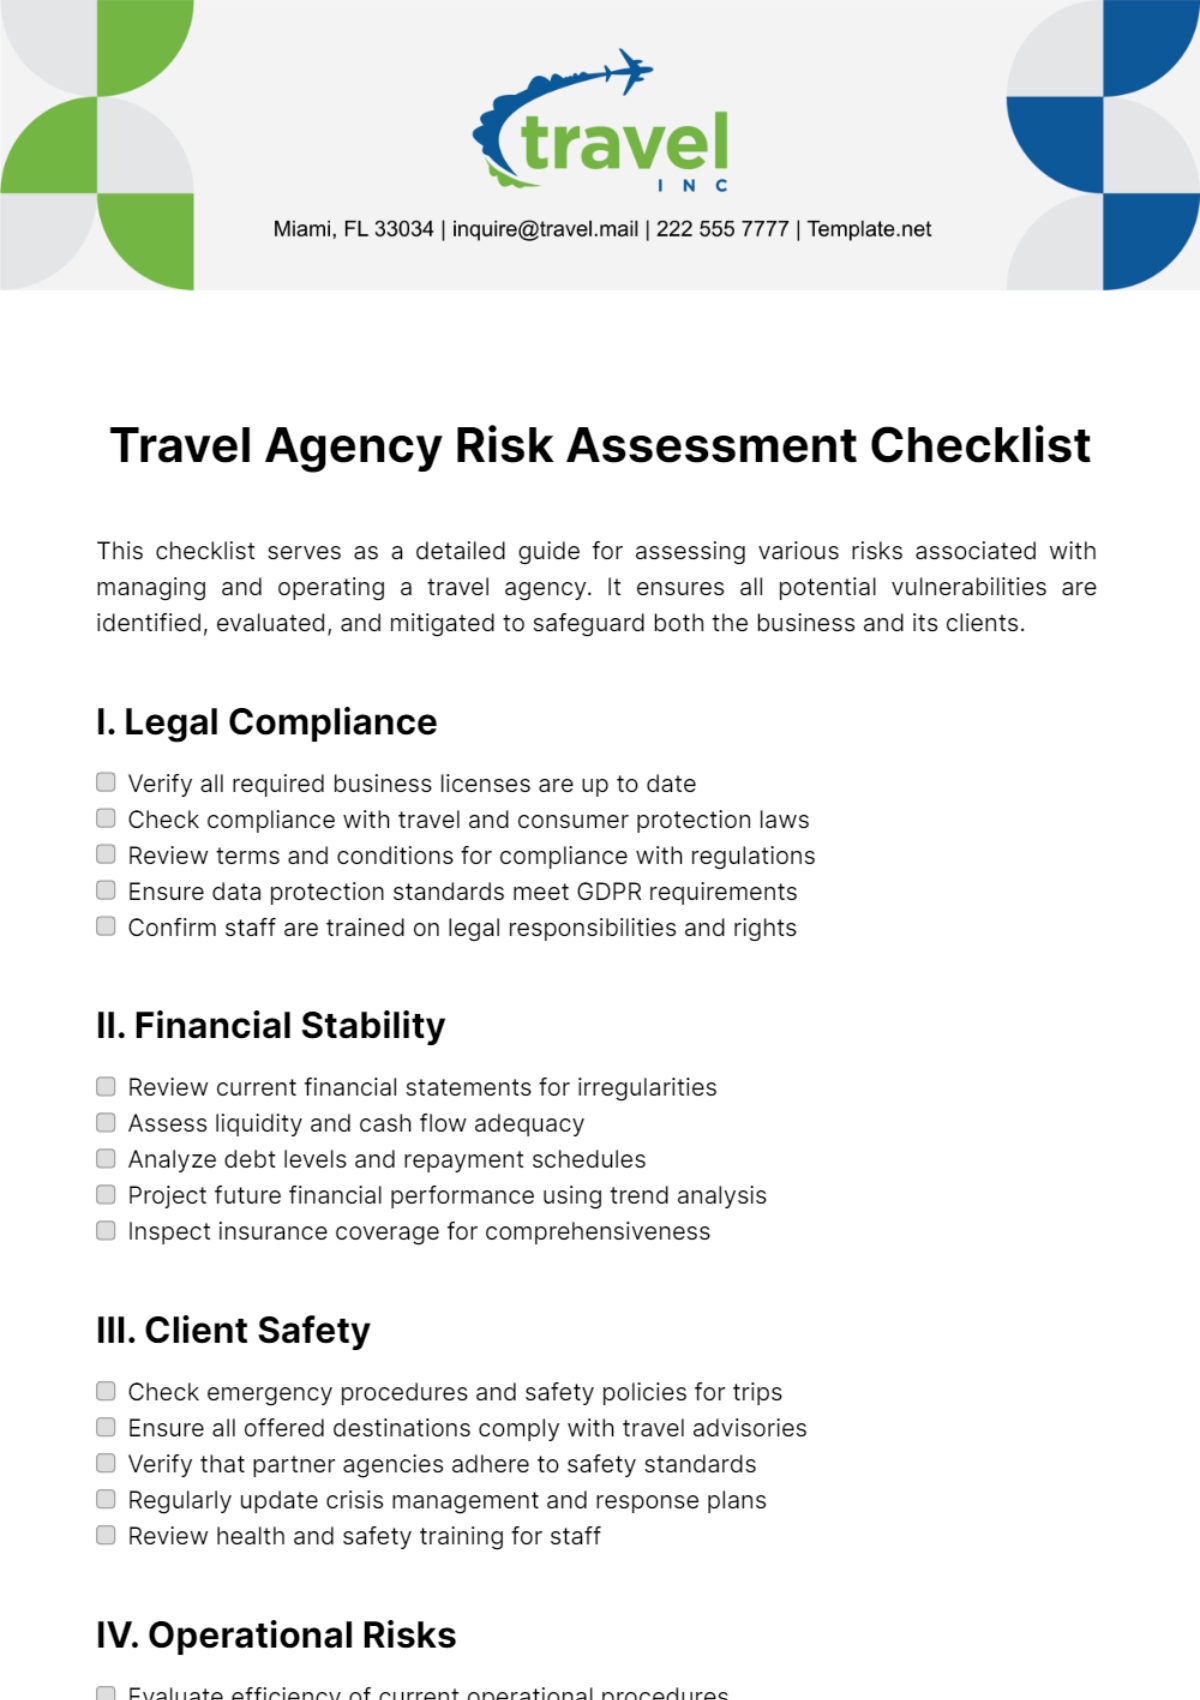 Travel Agency Risk Assessment Checklist Template